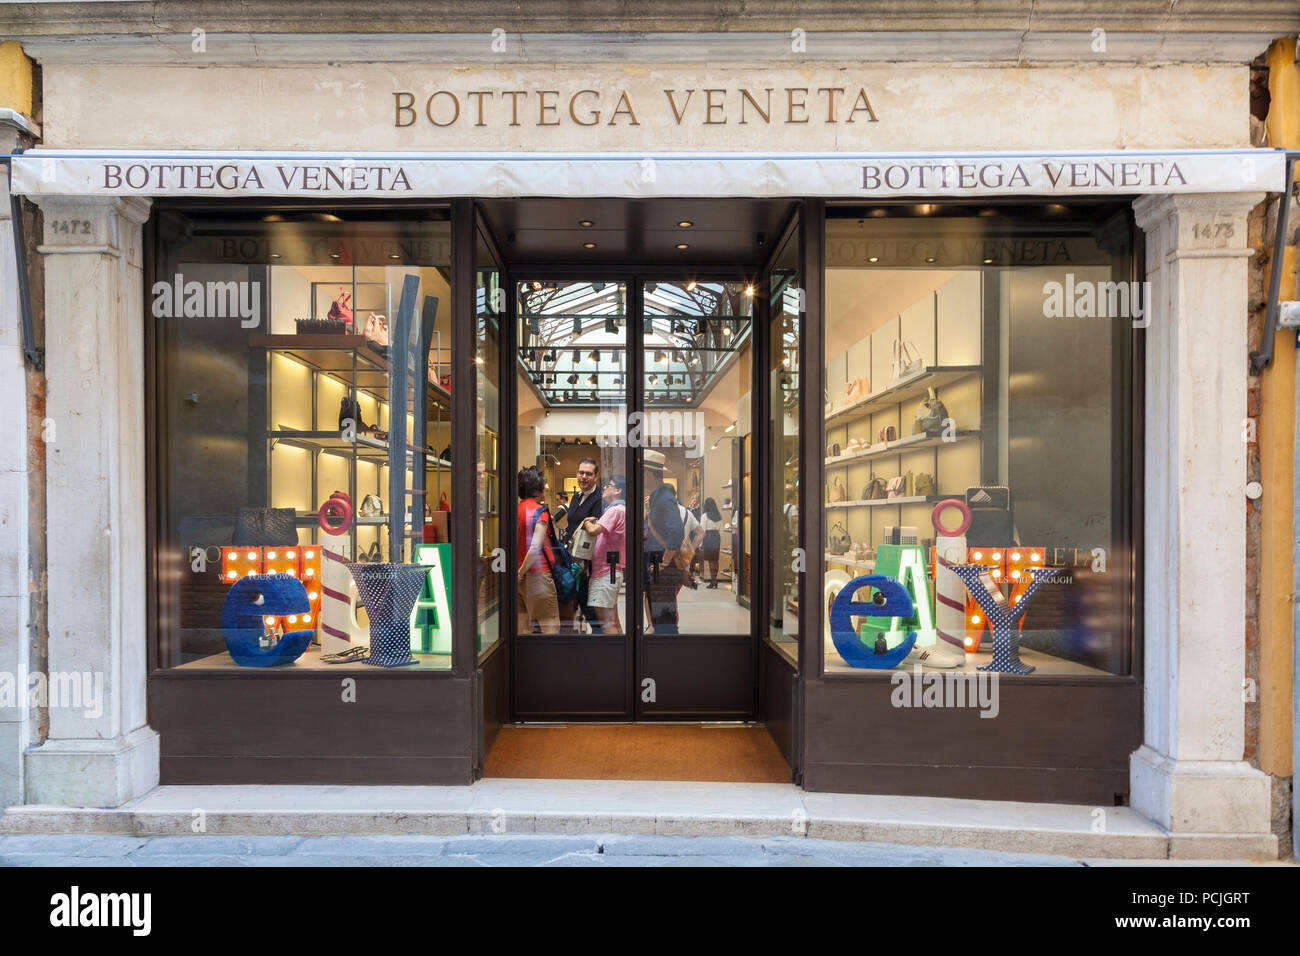 Bottega Veneta fashion store, San Marco, Venice, Veneto, Italy. Front window, entrance, signage, sign, fashion accessories, customers, people, shop, s Stock Photo